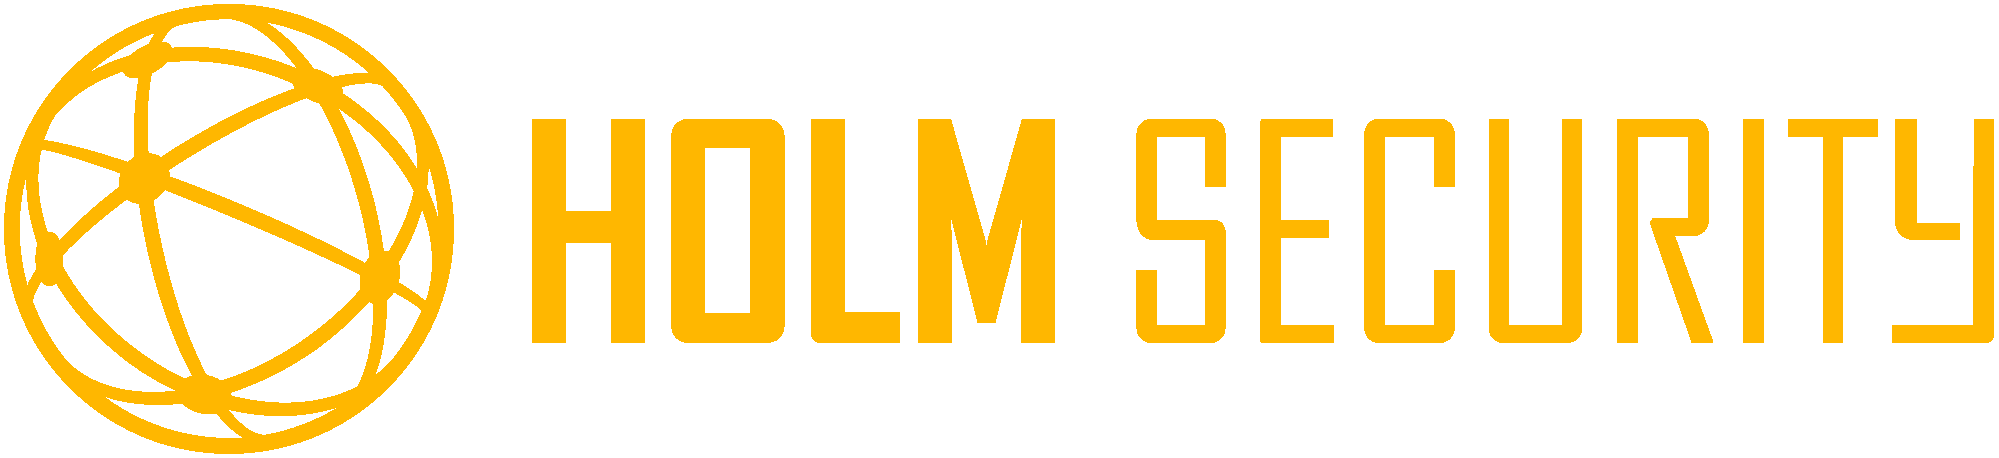 Holm Security Logo Yellow